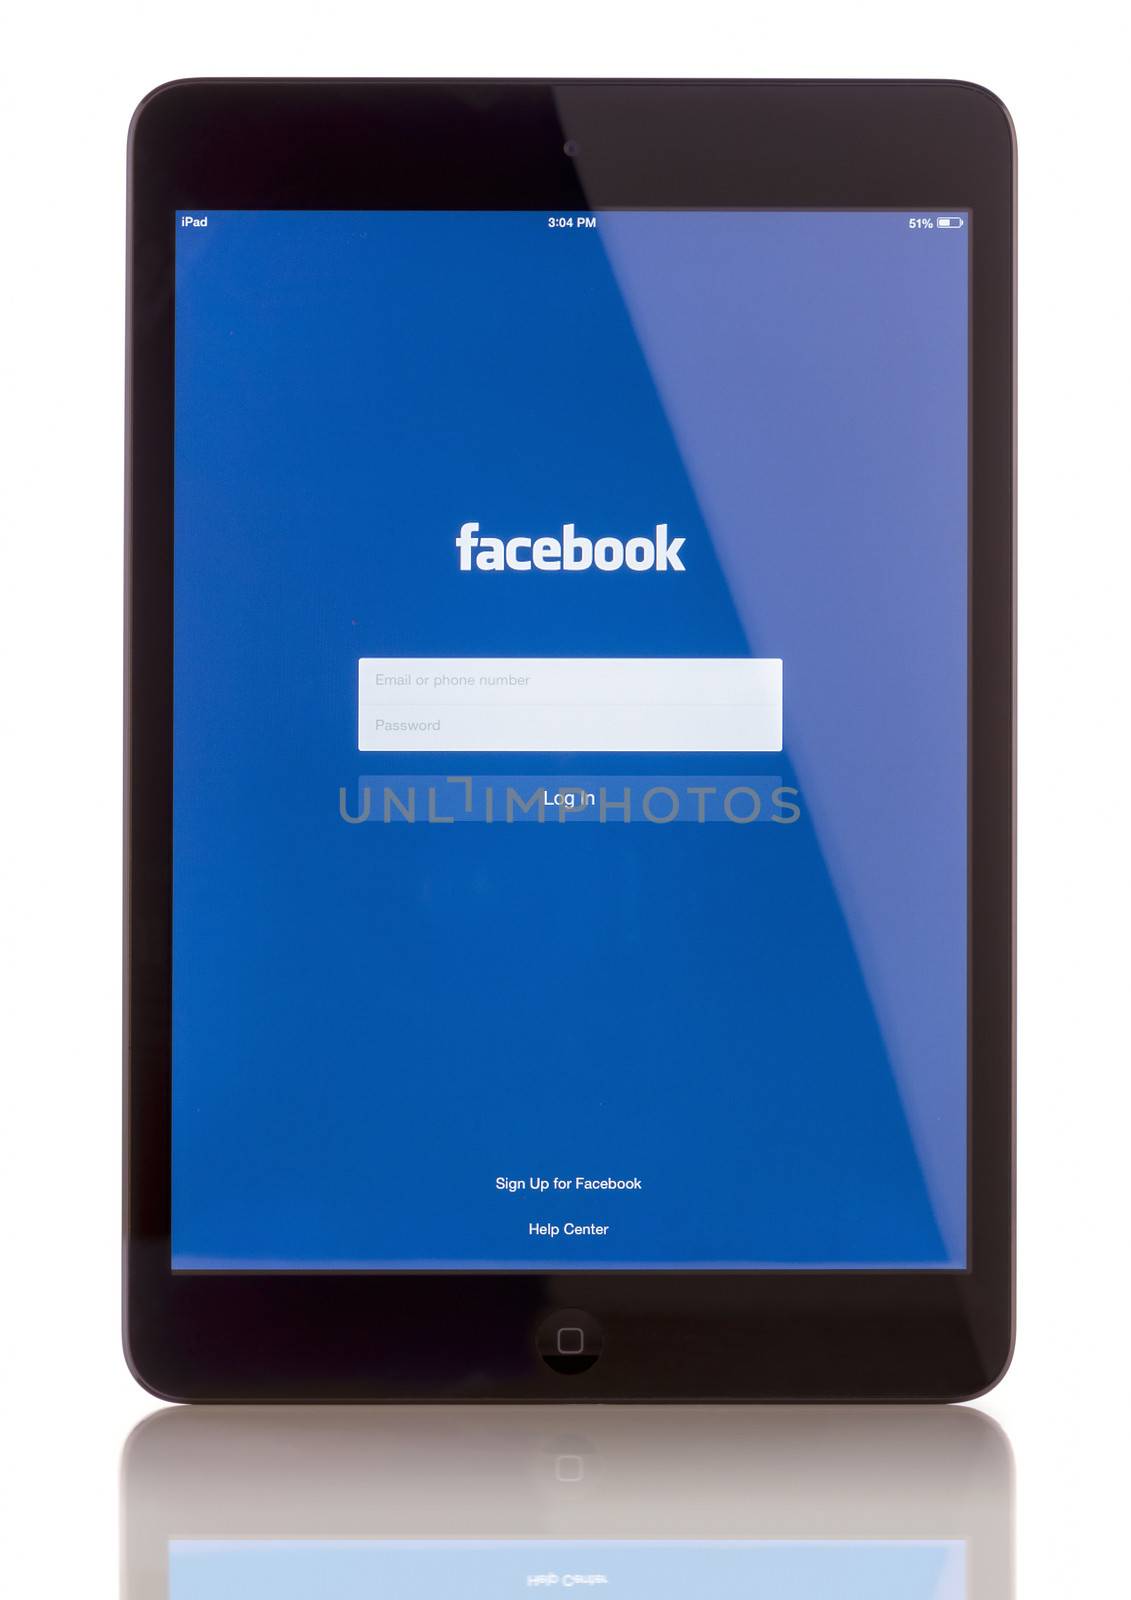 Facebook on iPad Mini by manaemedia